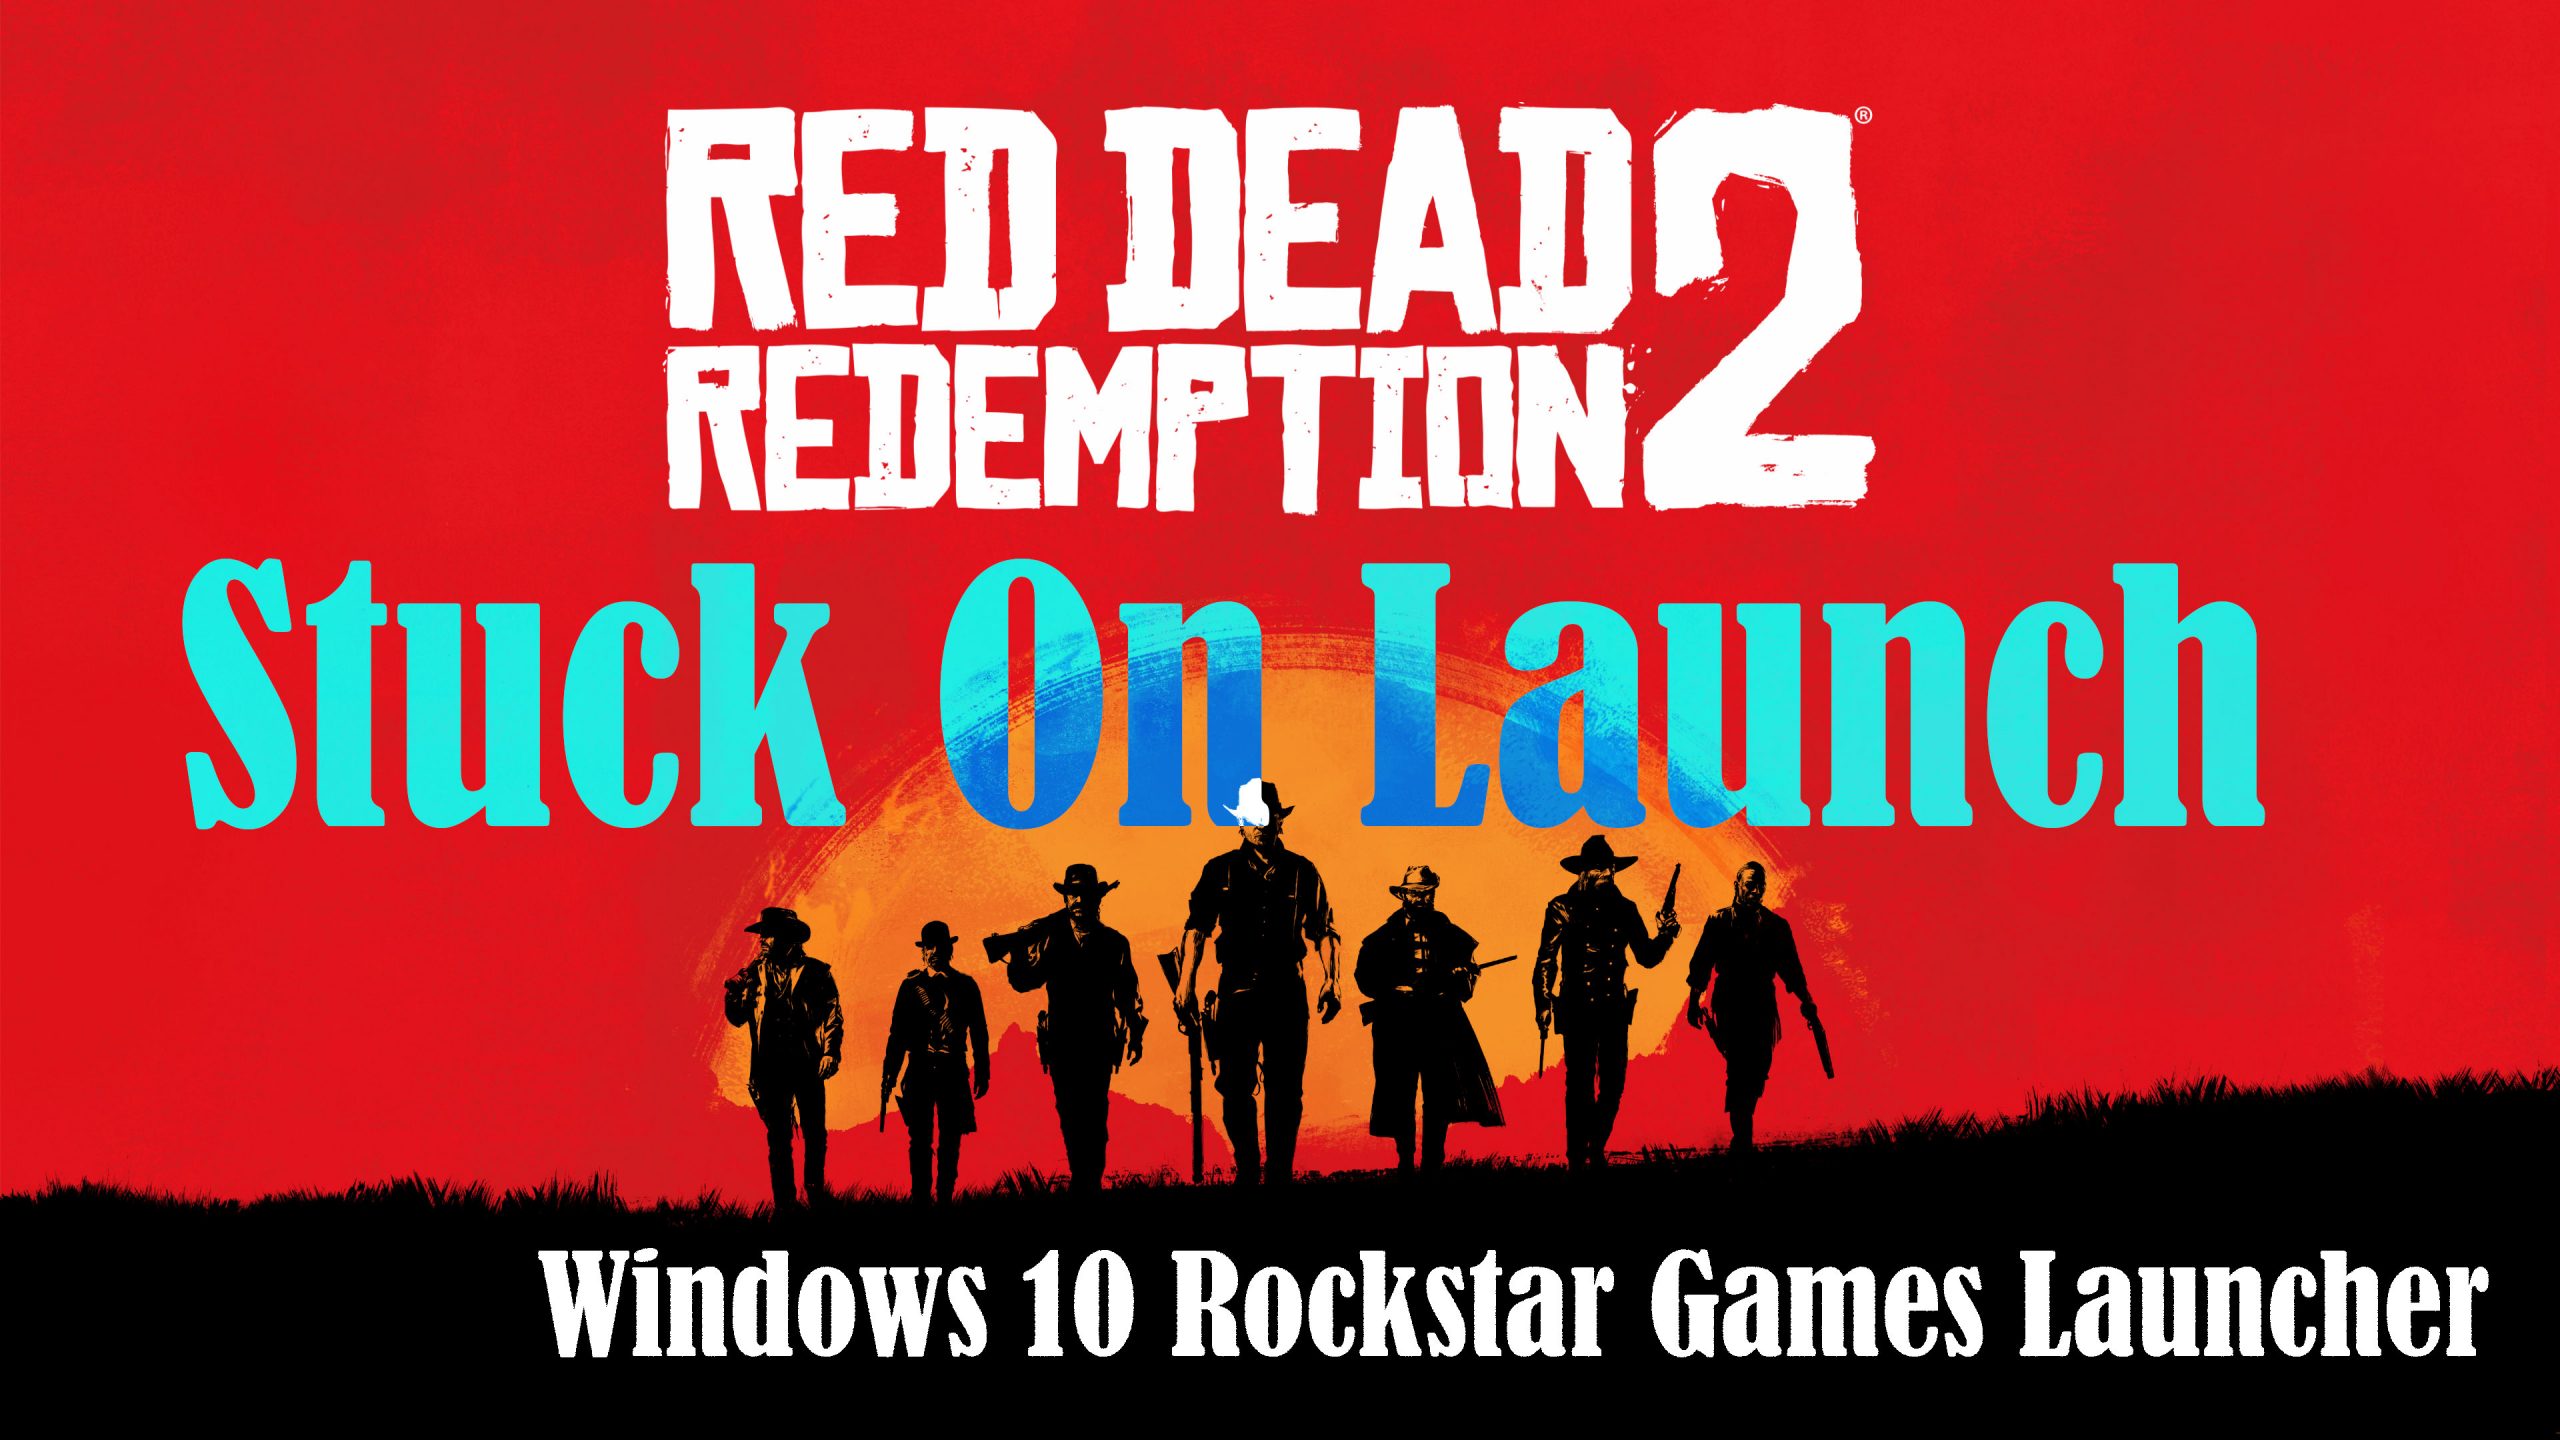 How to Fix Red Dead Redemption 2 Stuck on Launch error in Windows 10 Rockstar